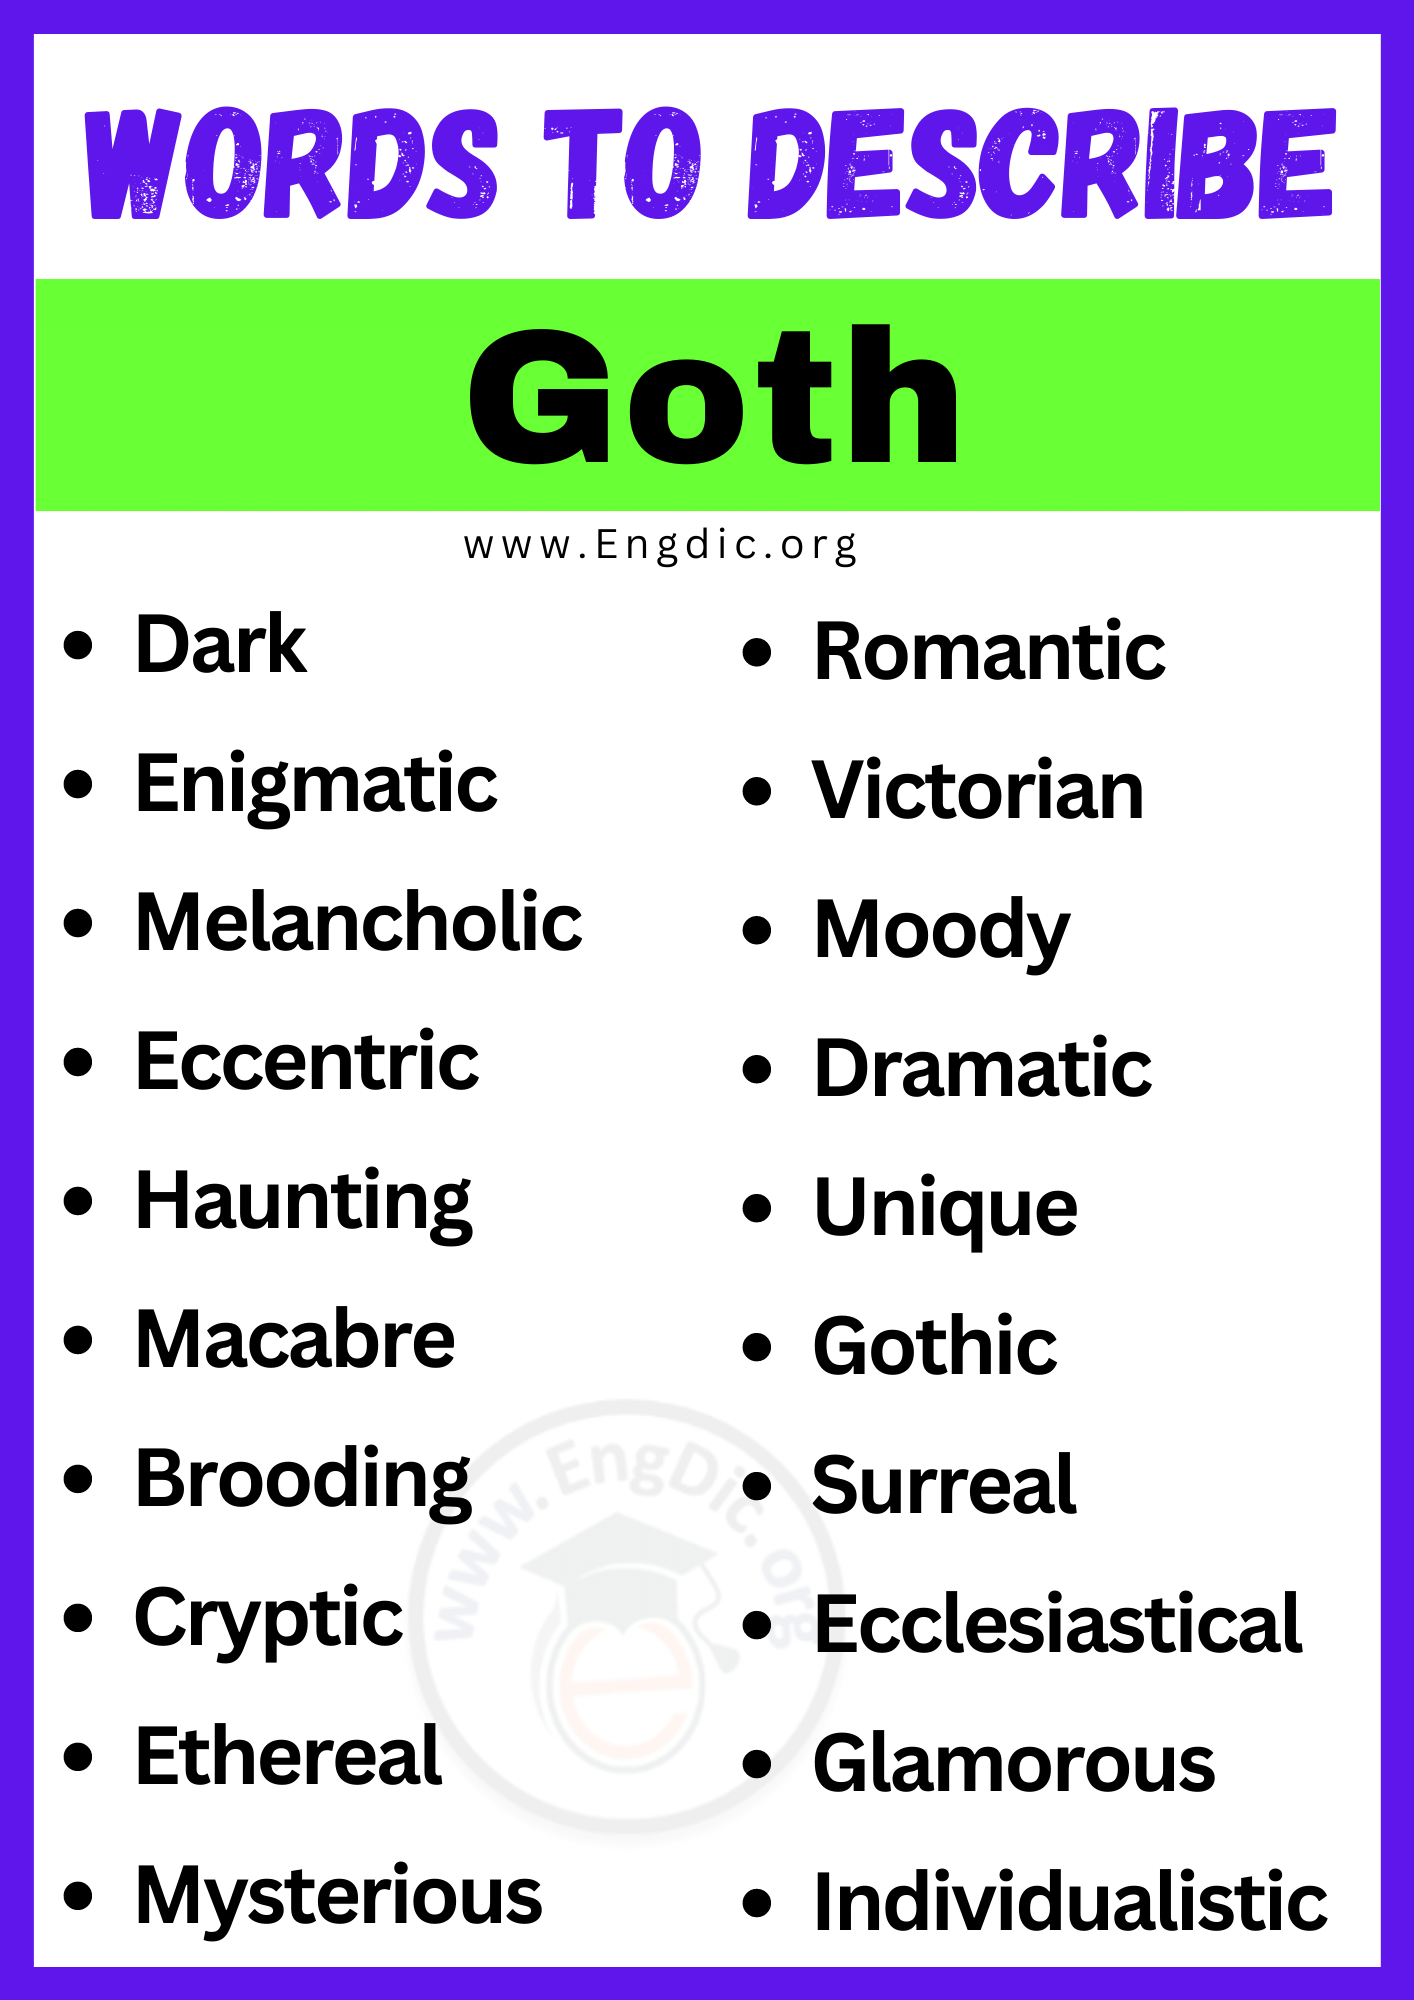 Words to Describe Goth